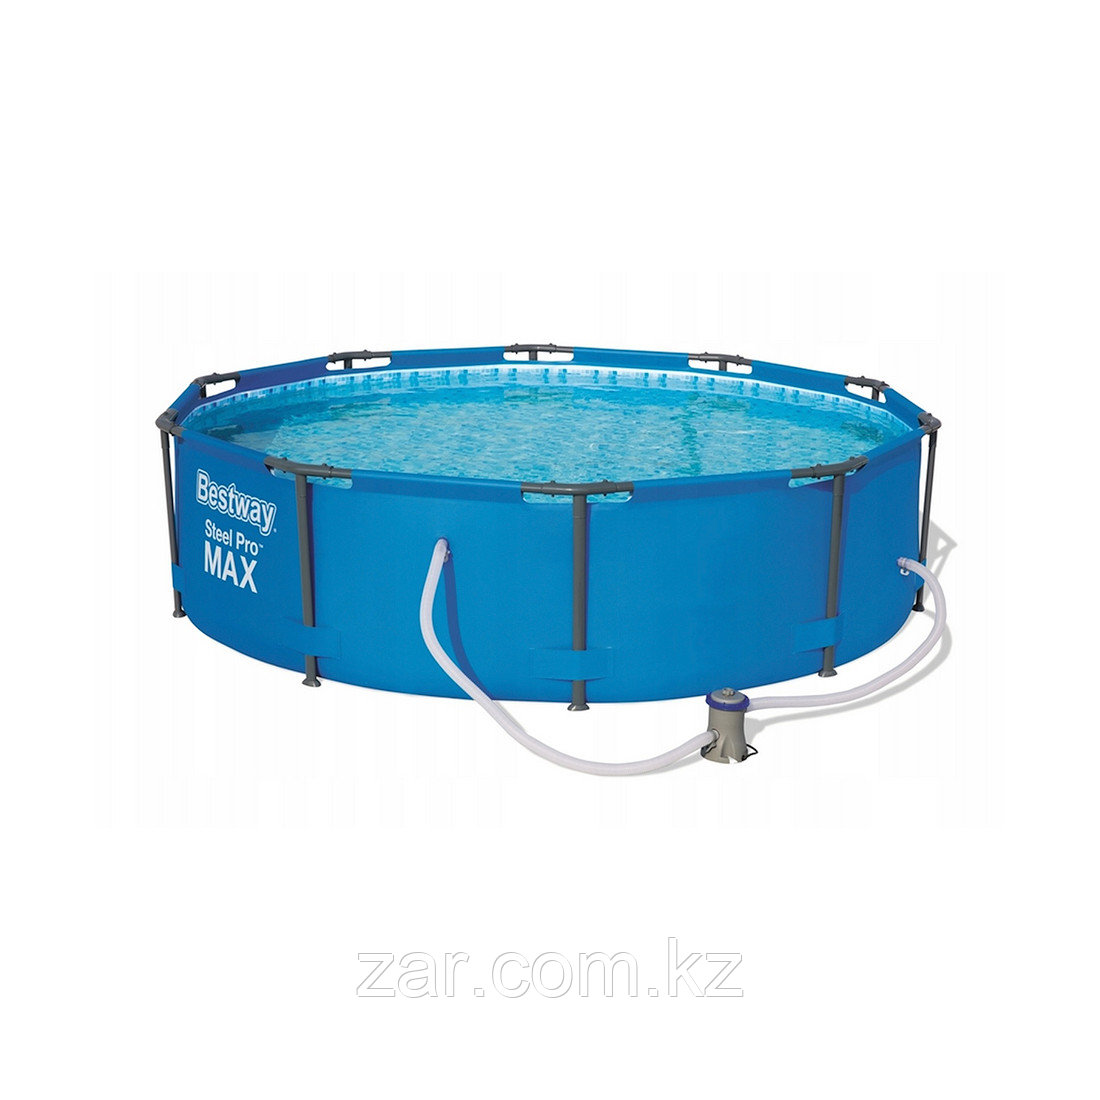 Каркасный бассейн Steel Pro MAX 305 х 100 см, BESTWAY14415 (56984)